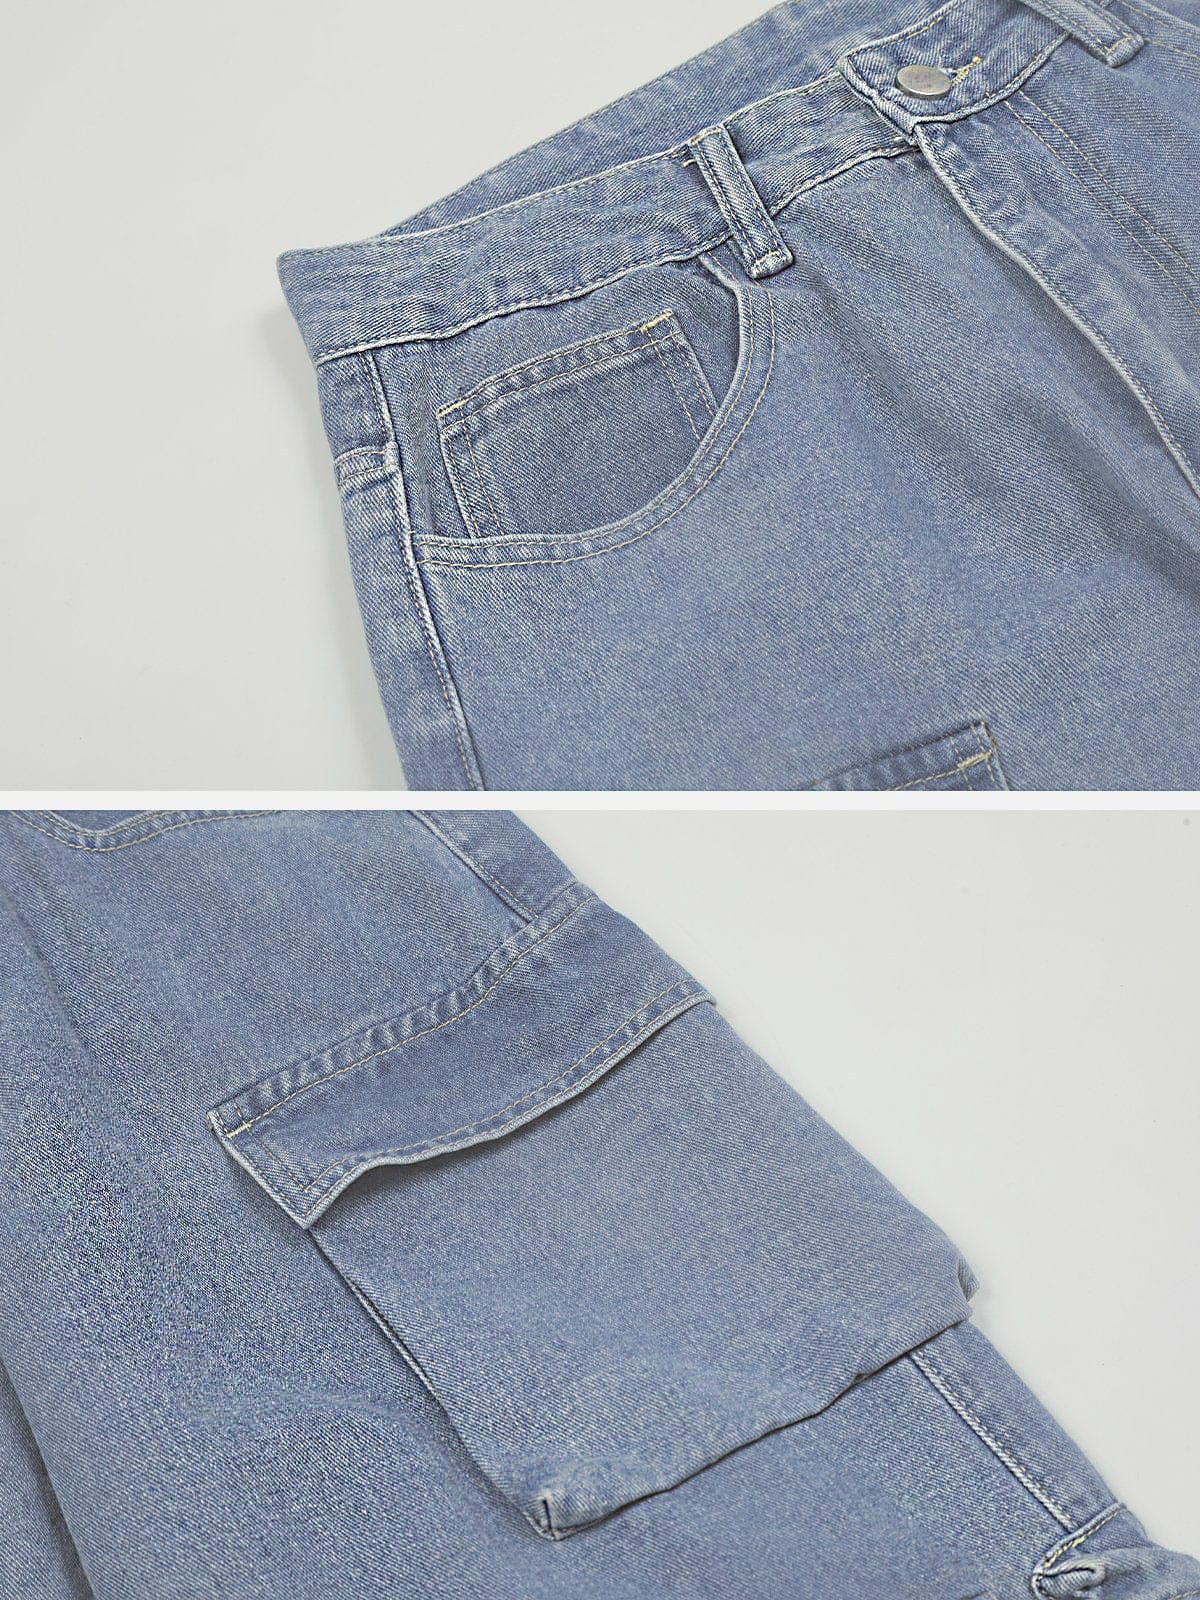 NEV Vintage Multi Pocket Jeans